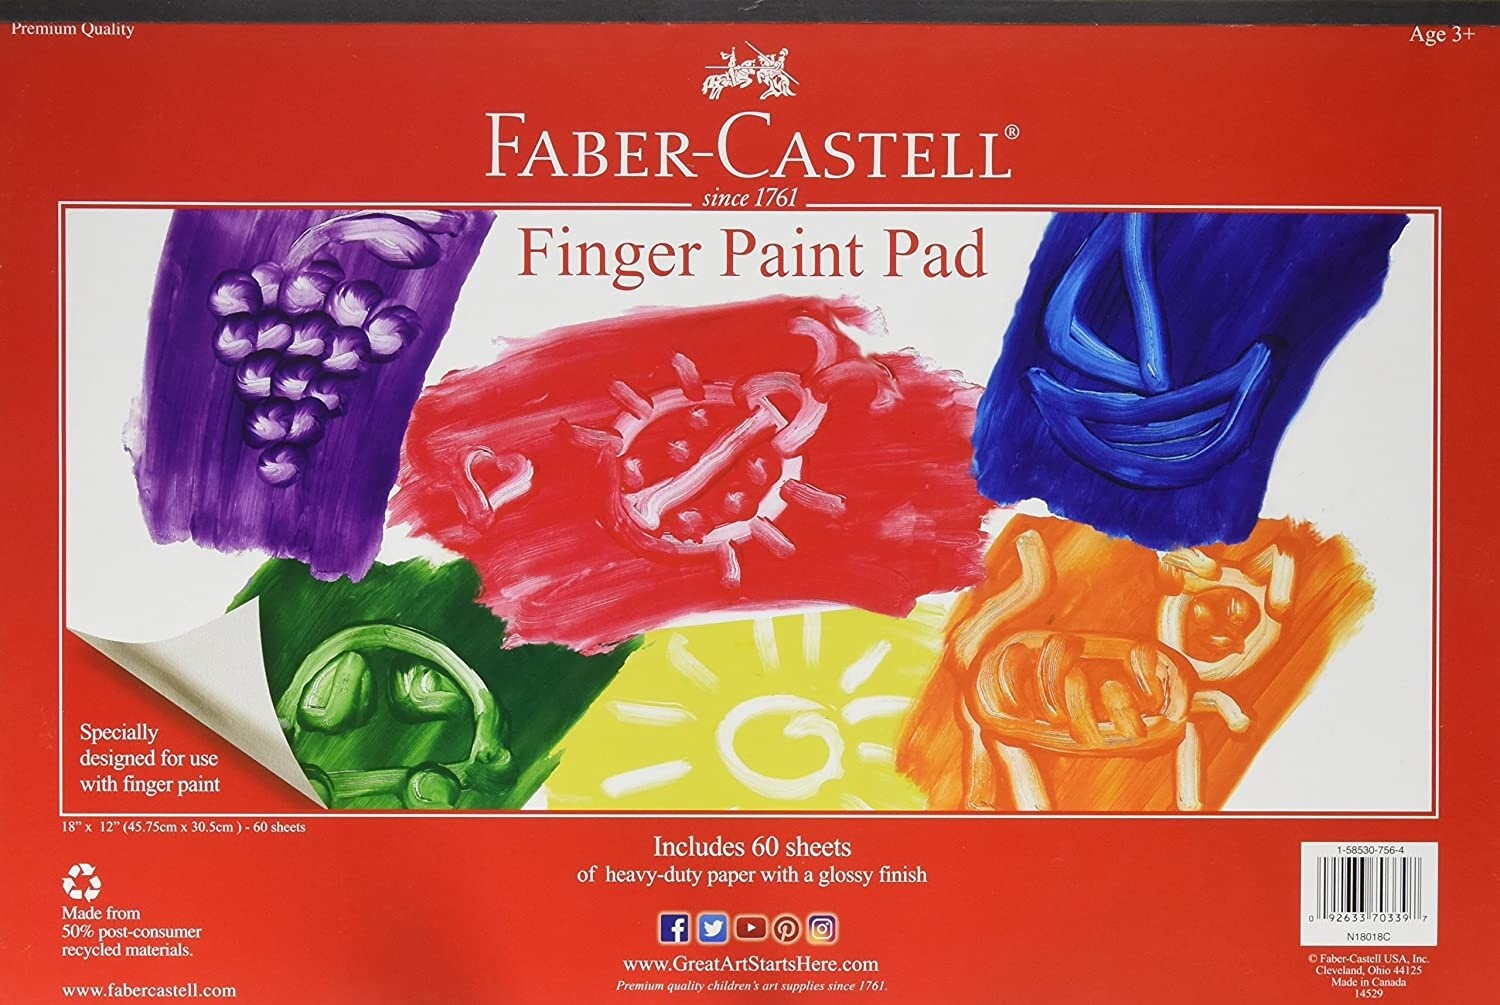 Faber-Castell Finger Paint Pad 12" x 18"